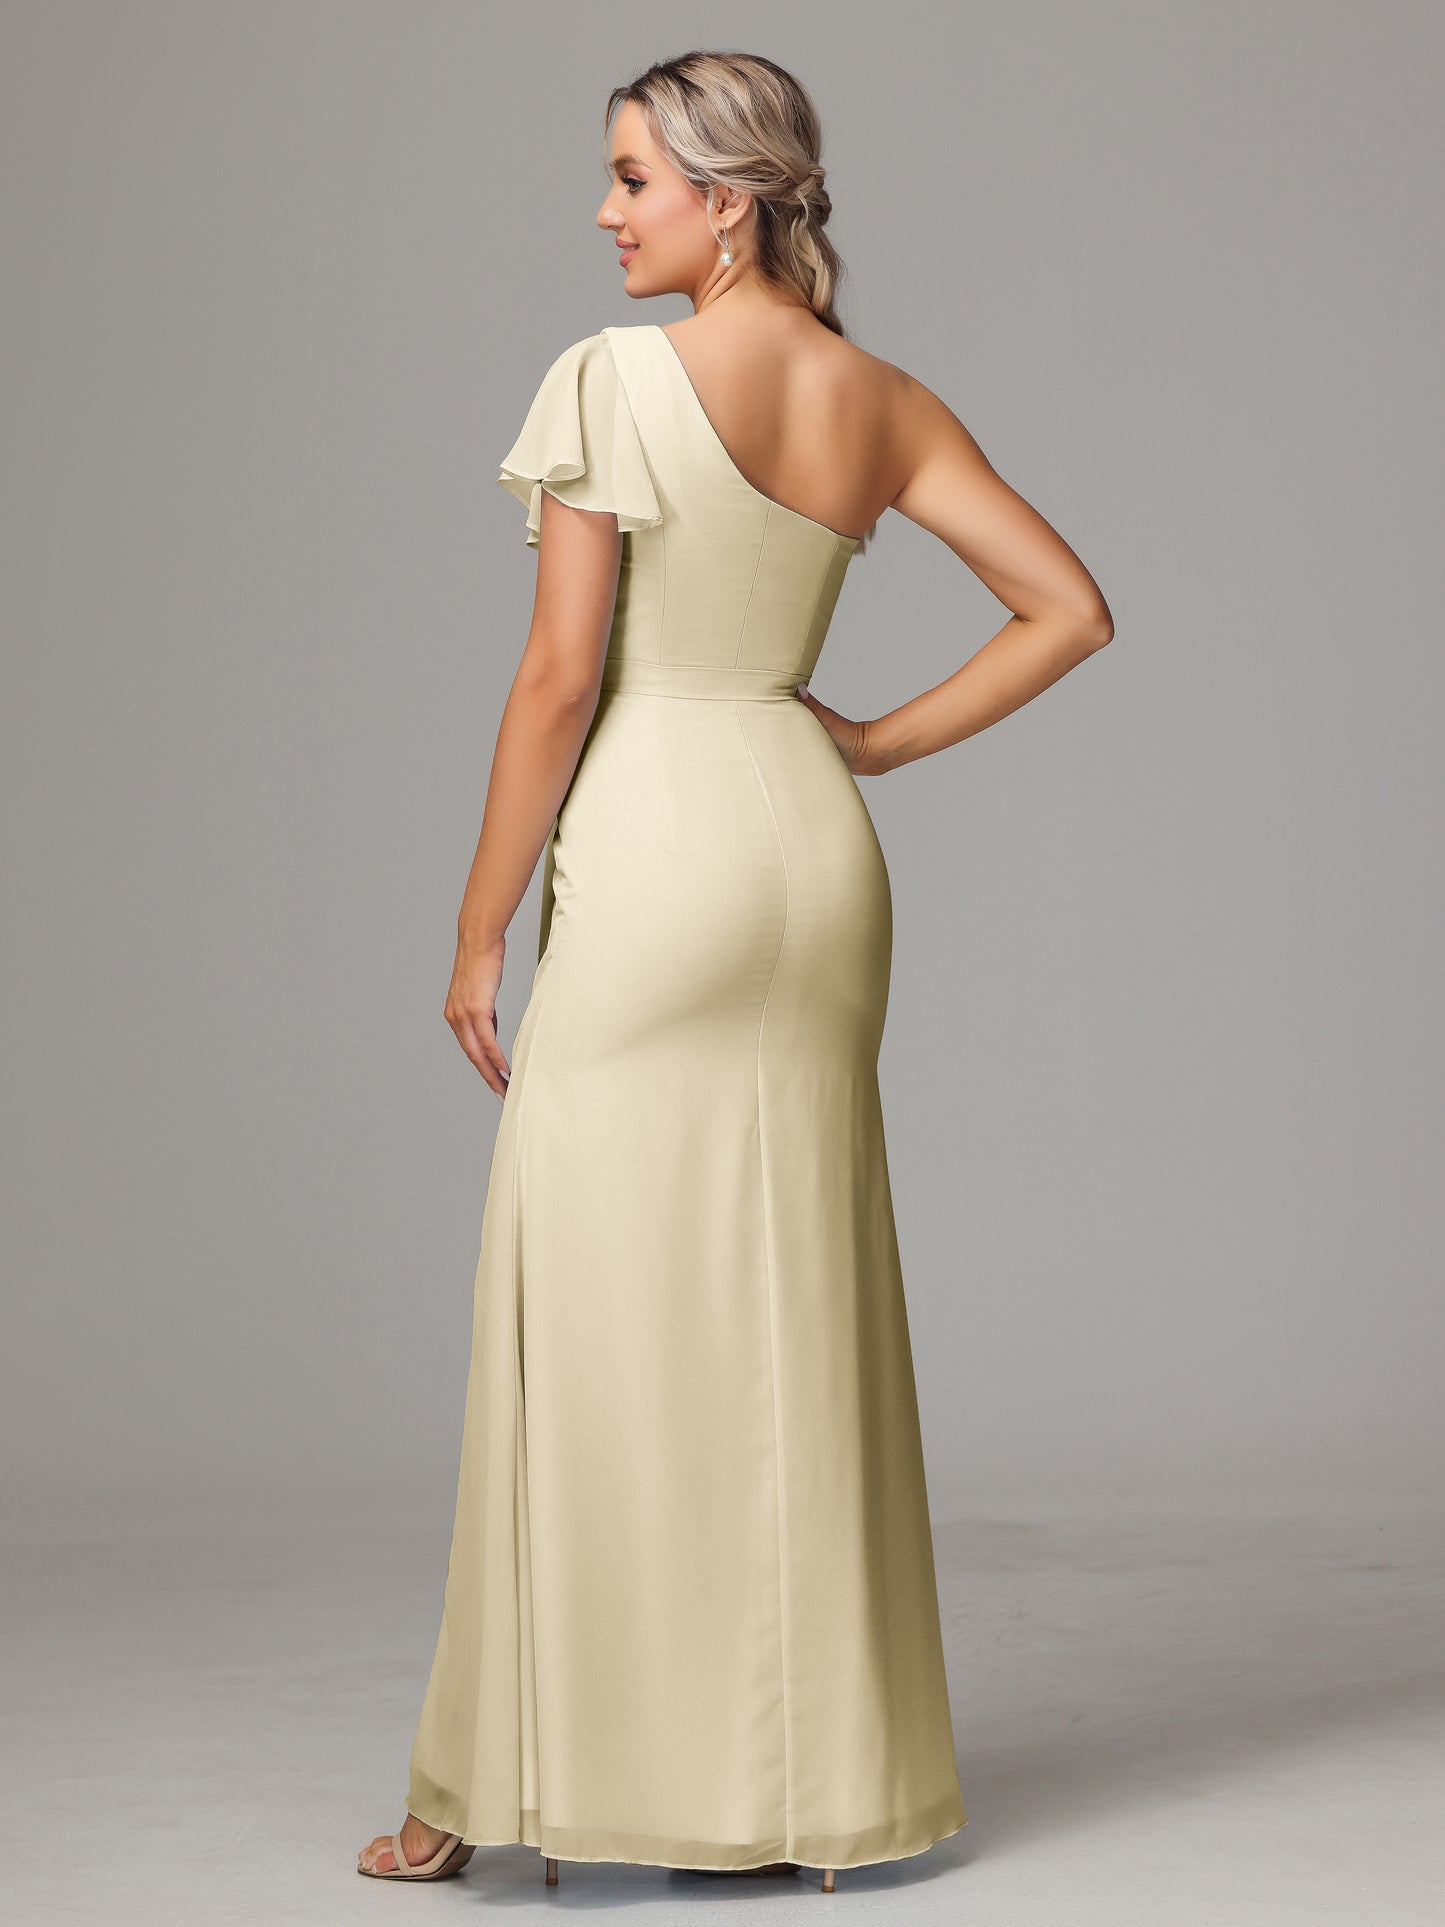 One Shoulder With Slit Chiffon Bridesmaid Dress